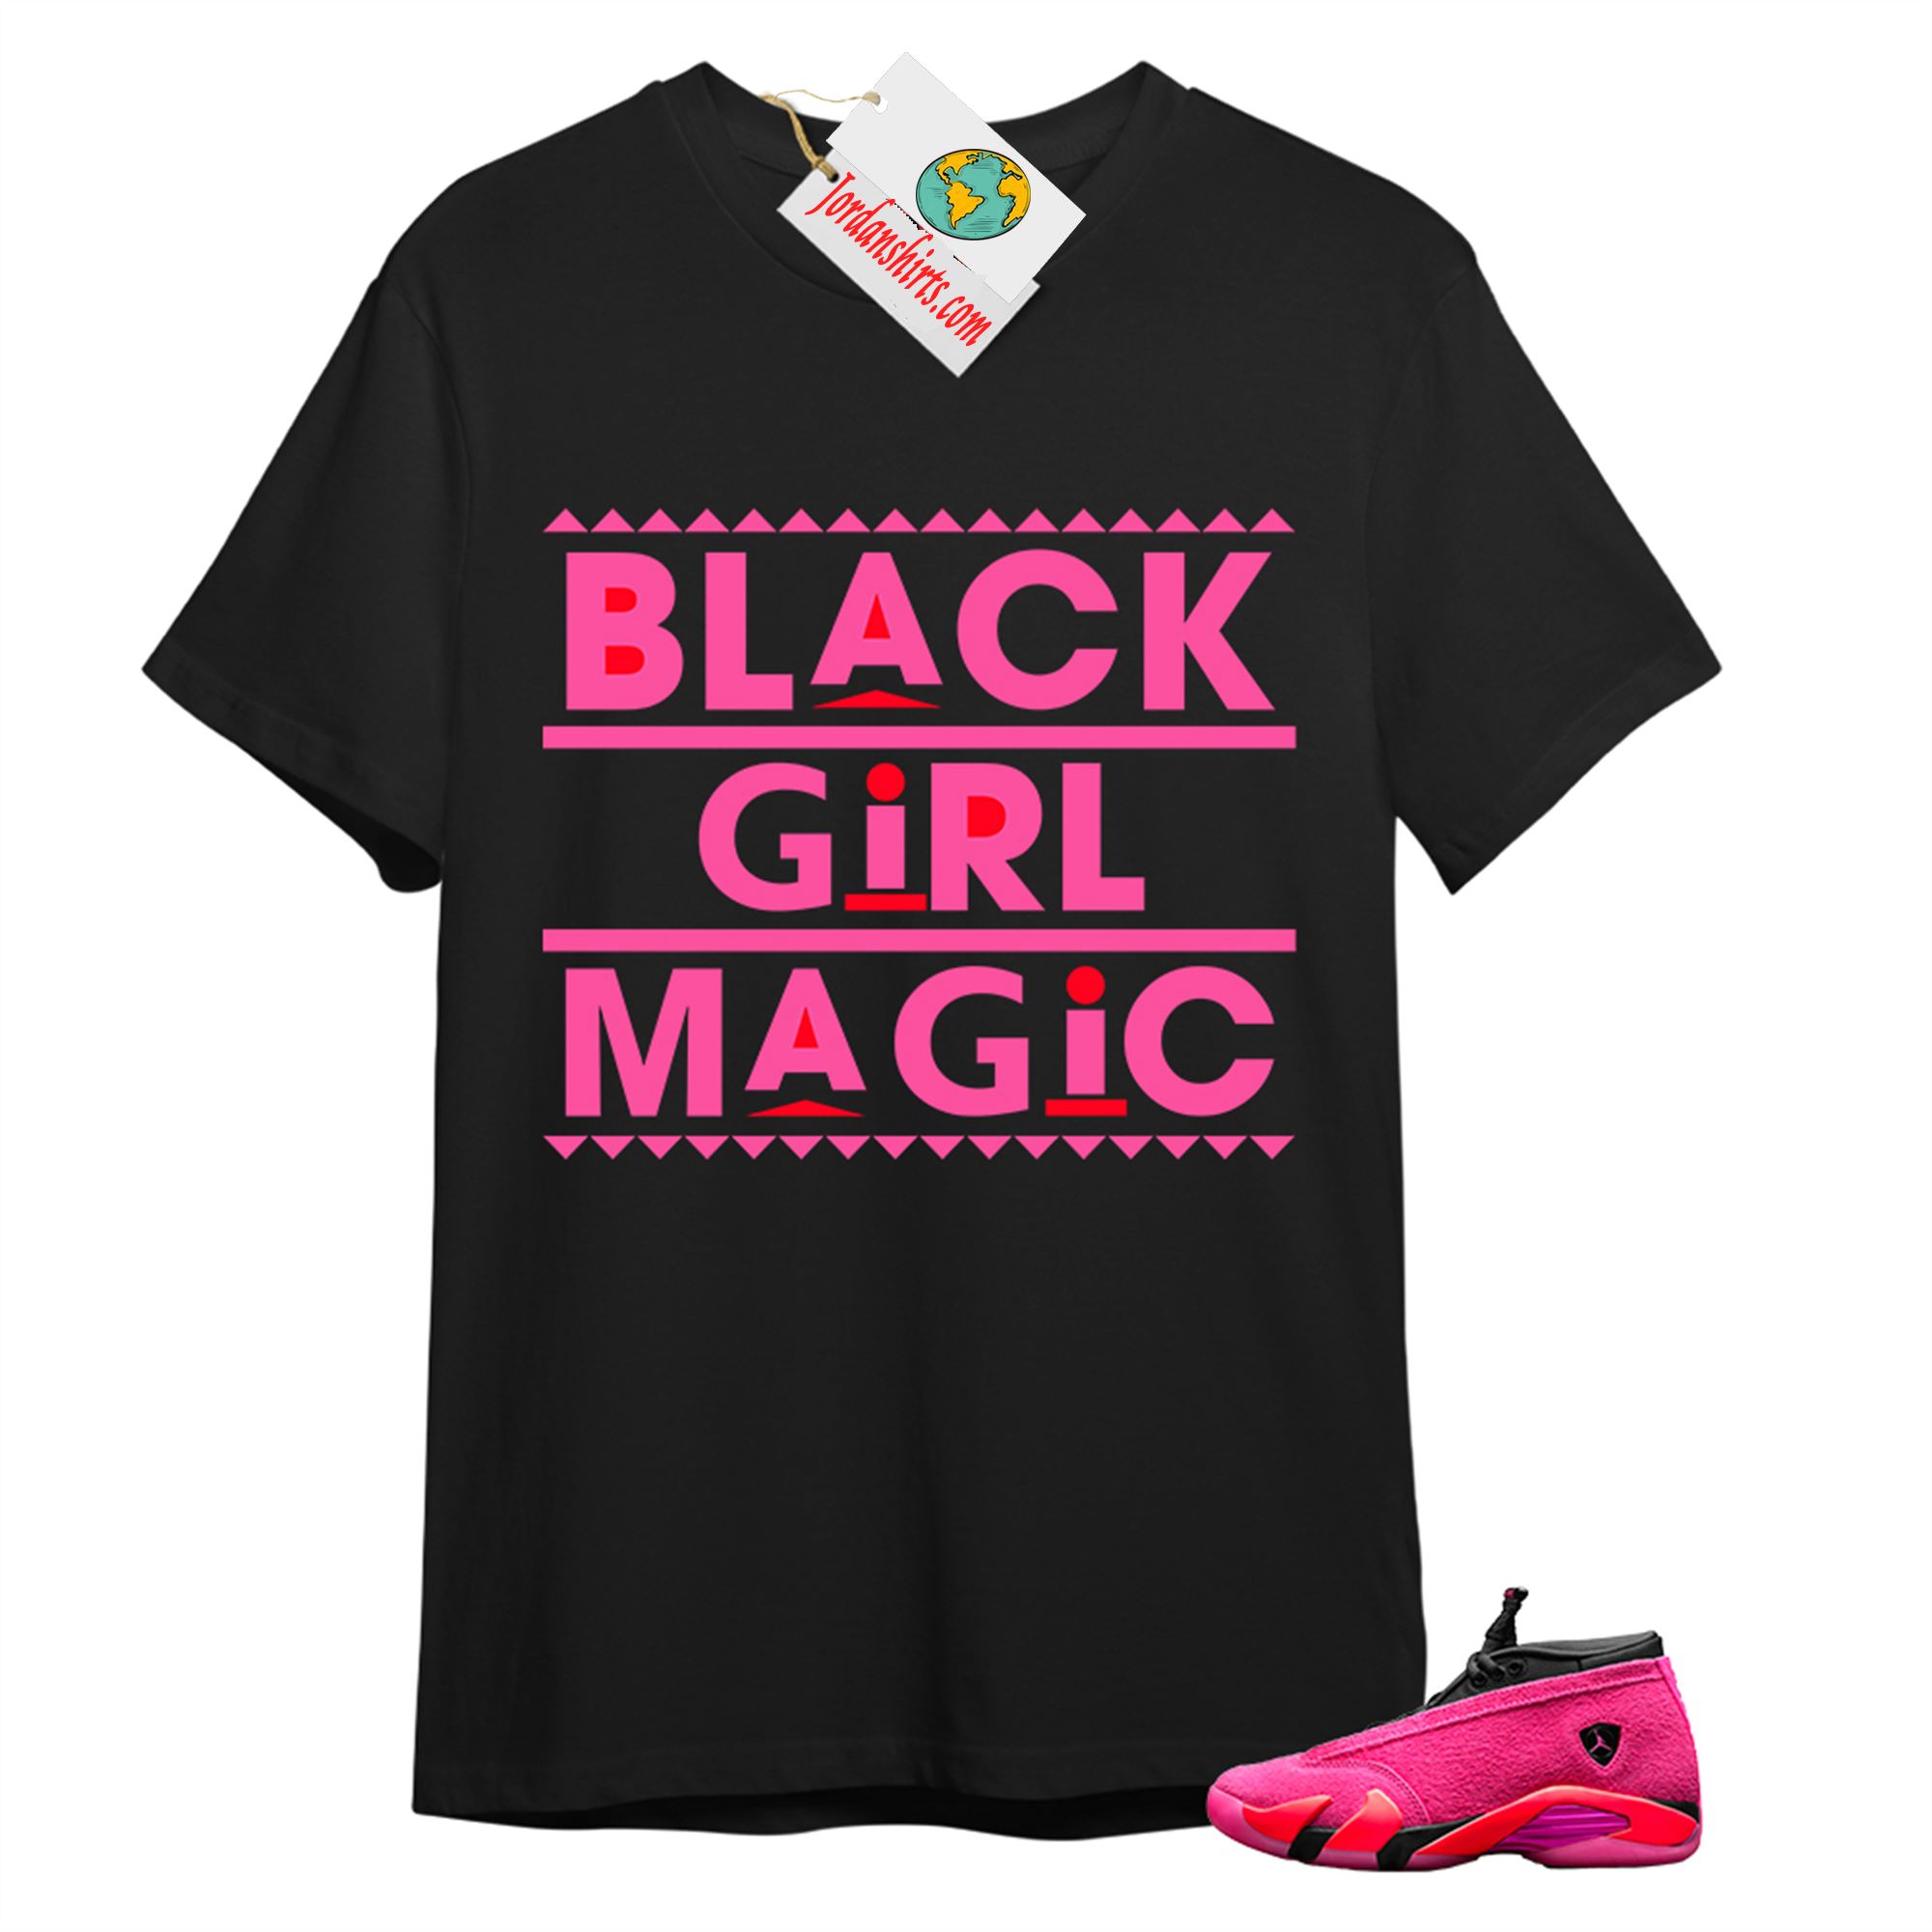 Jordan 14 Shirt, Black Girl Magic Black T-shirt Air Jordan 14 Wmns Shocking Pink 14s Full Size Up To 5xl